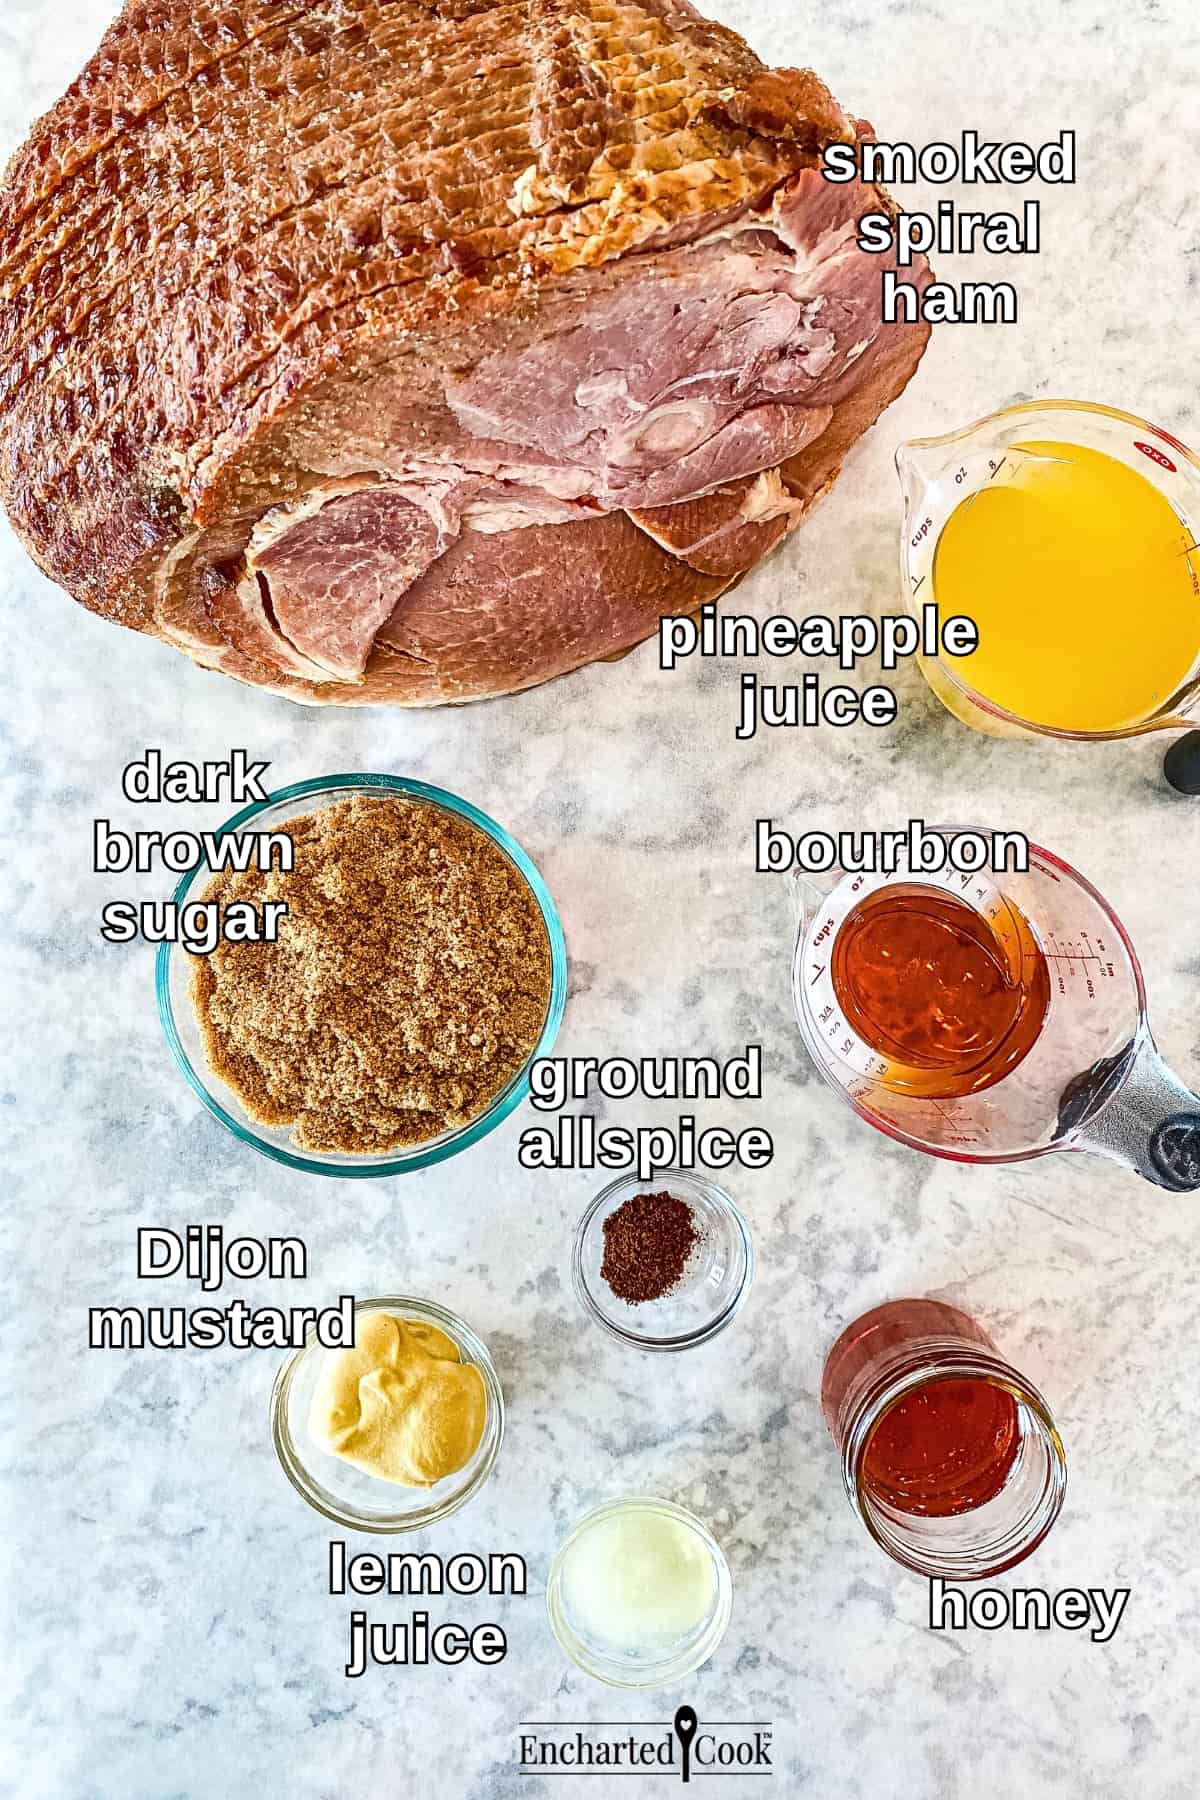 The ingredients, clockwise from top: smoked spiral ham, pineapple juice, bourbon, ground allspice, honey, lemon juice, Dijon mustard, and dark brown sugar.